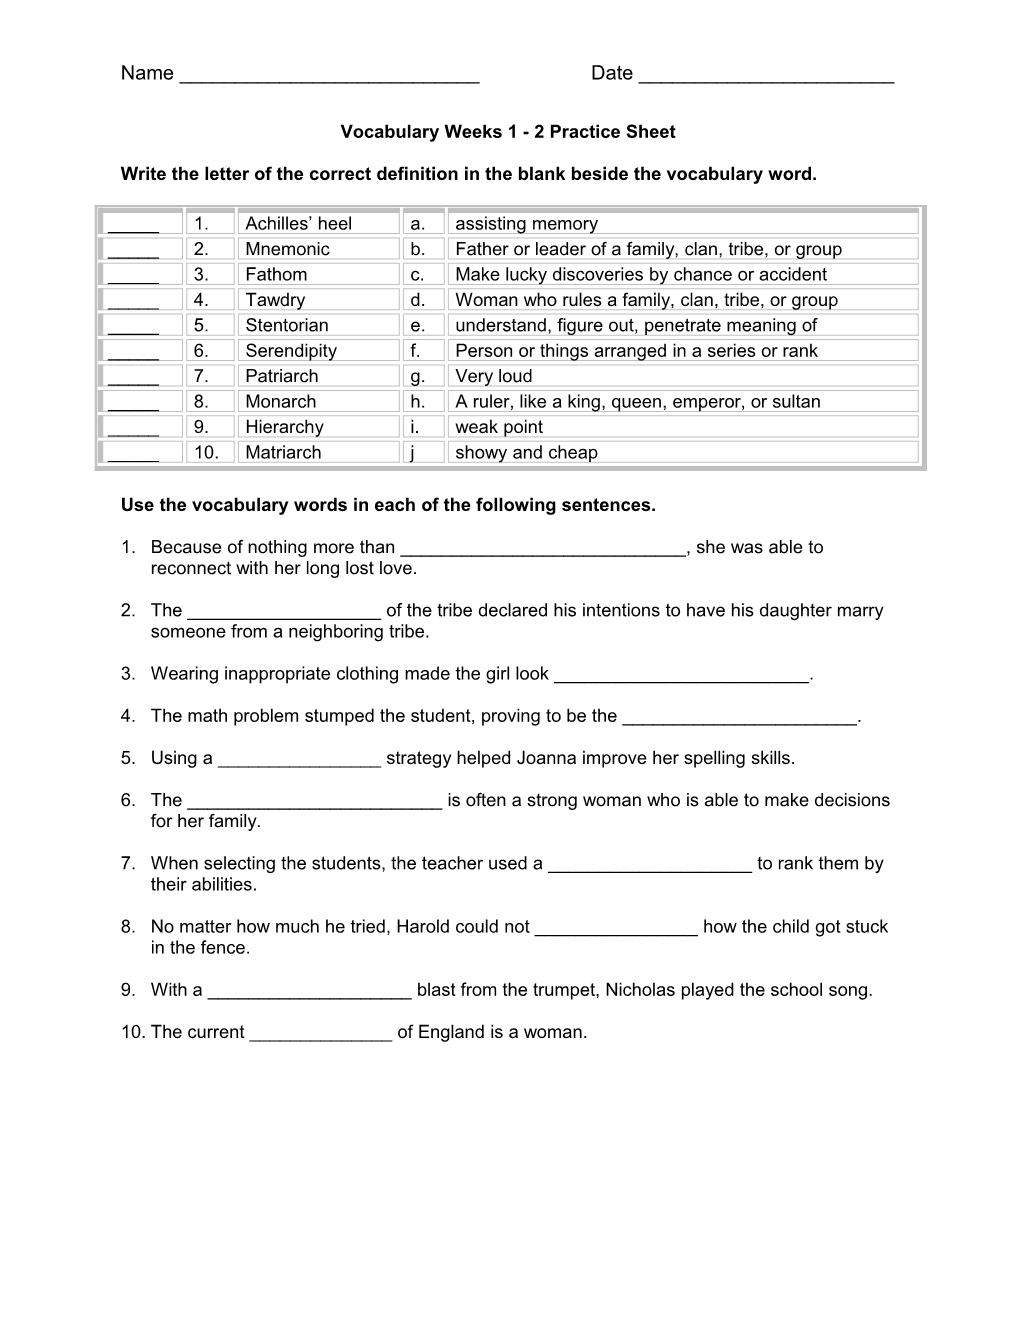 Vocabulary Weeks 1 - 2 Practice Sheet